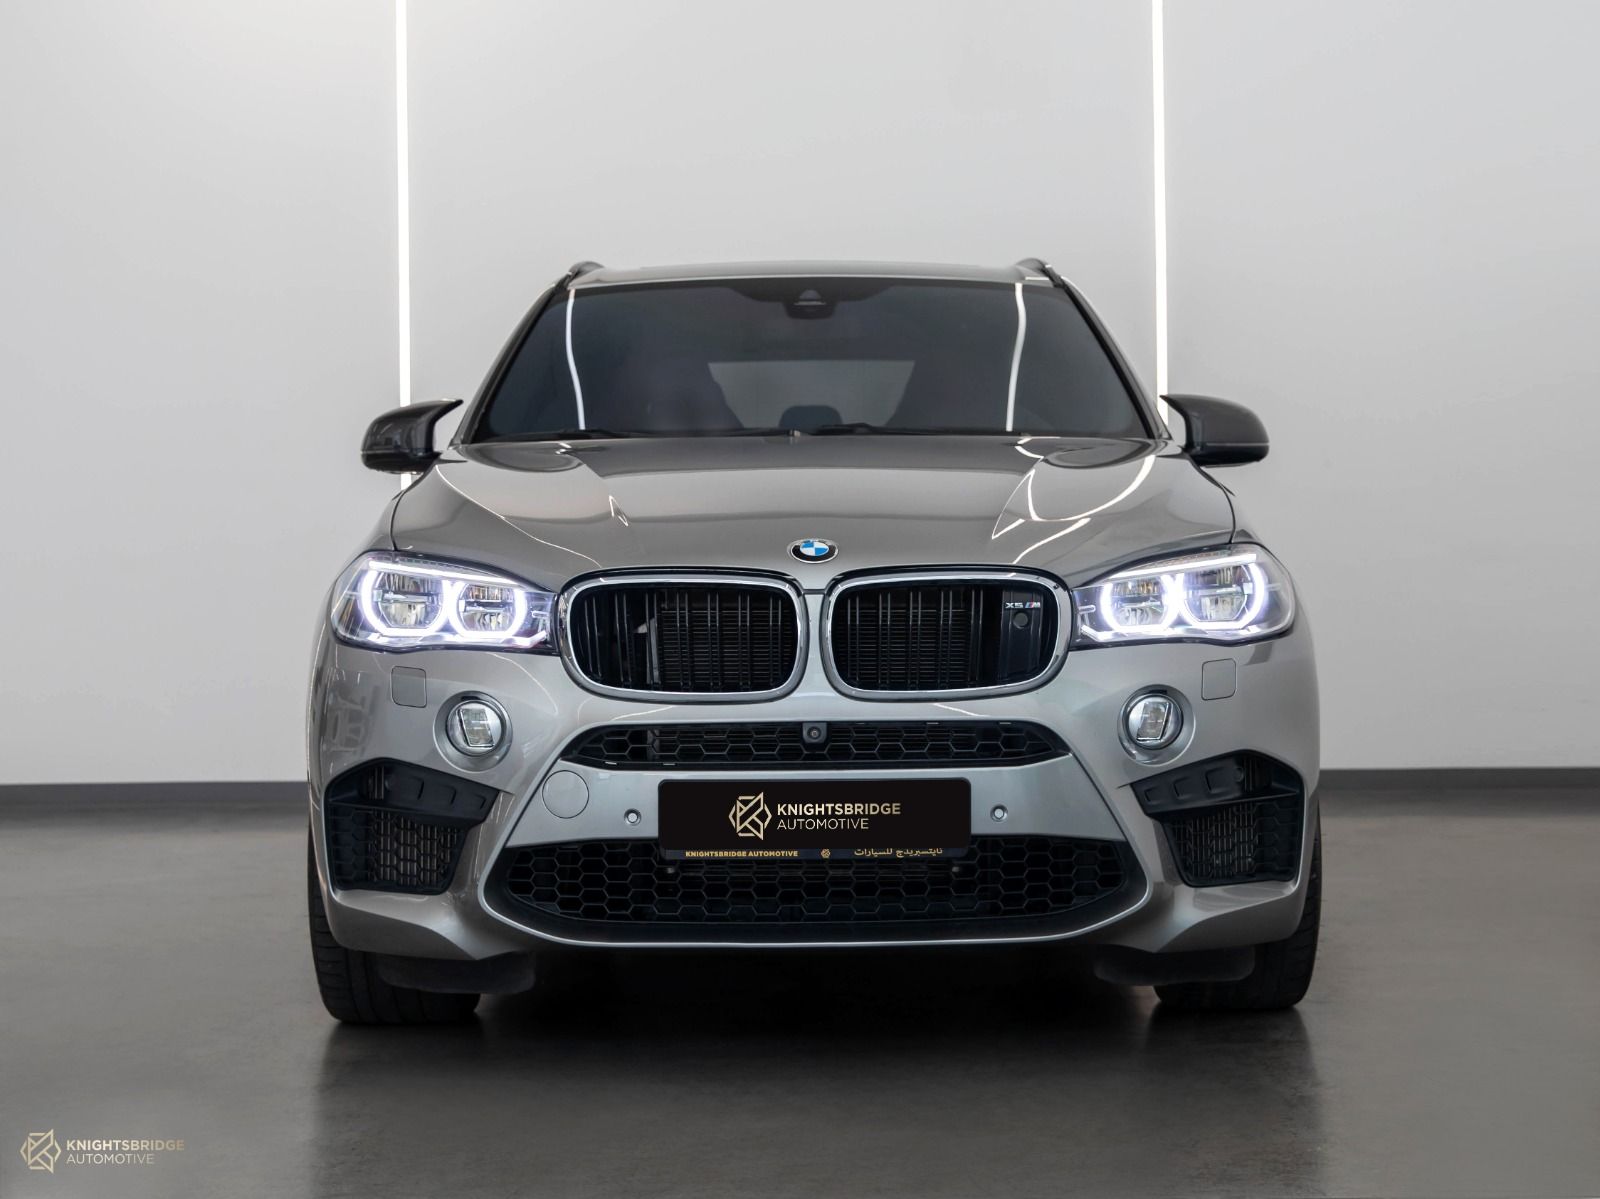 2018 BMW X5M at Knightsbridge Automotive - (11042 - 2)